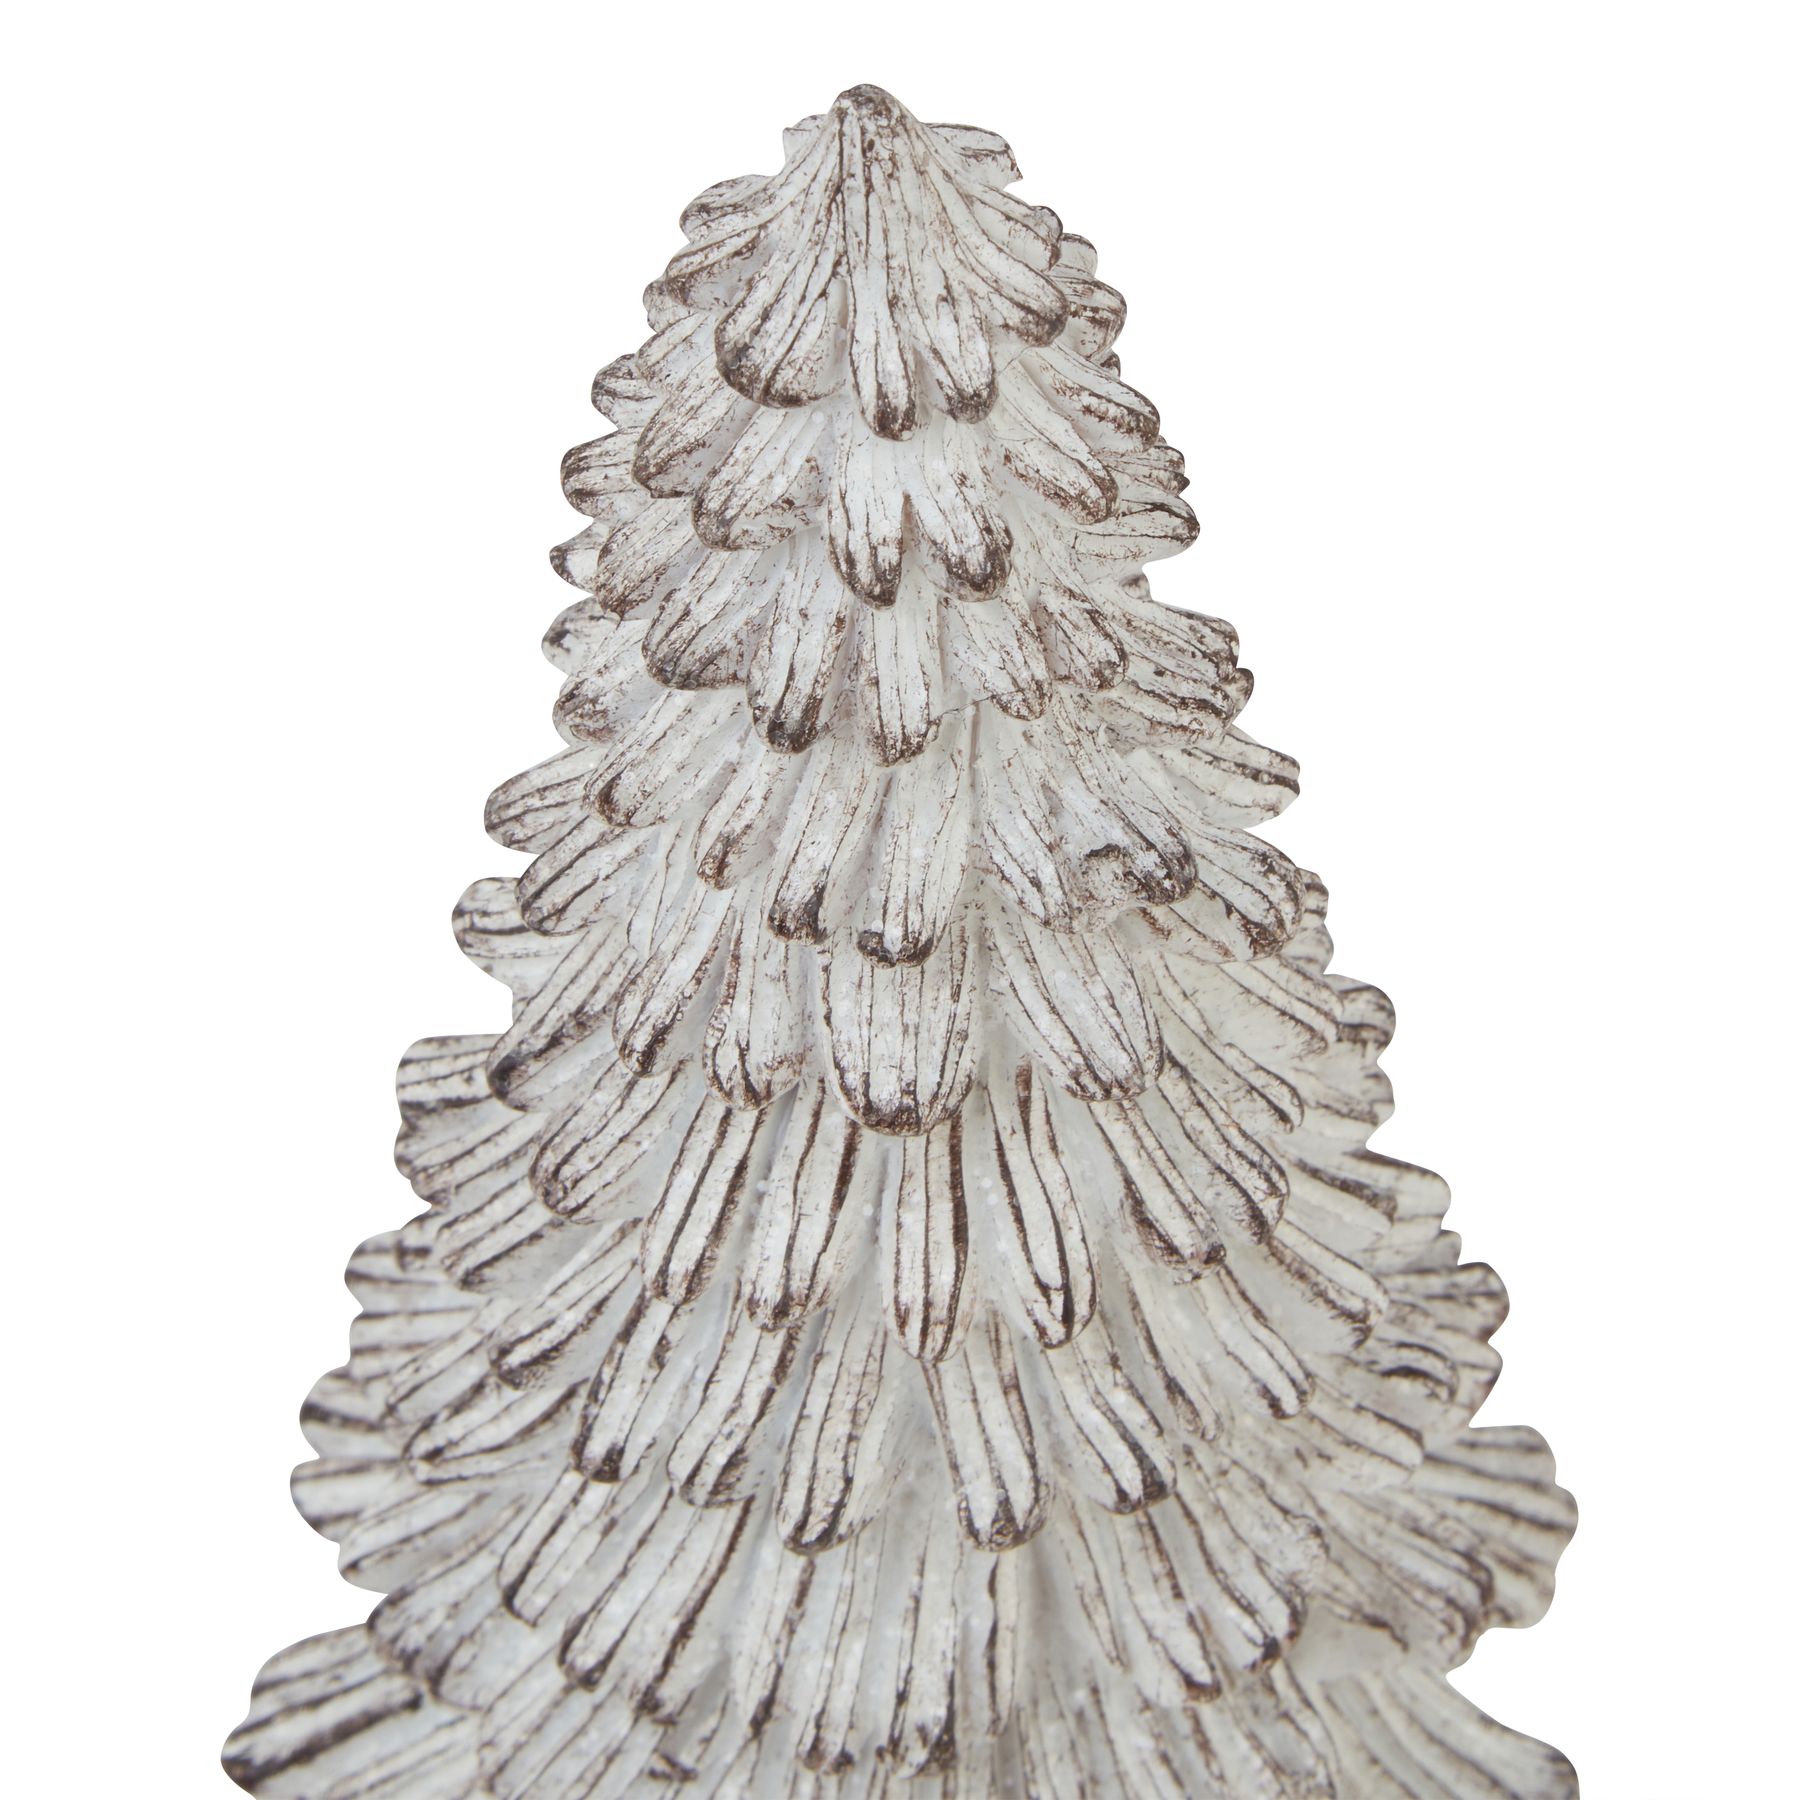 Small Snowy Fir Tree Sculpture - Image 2